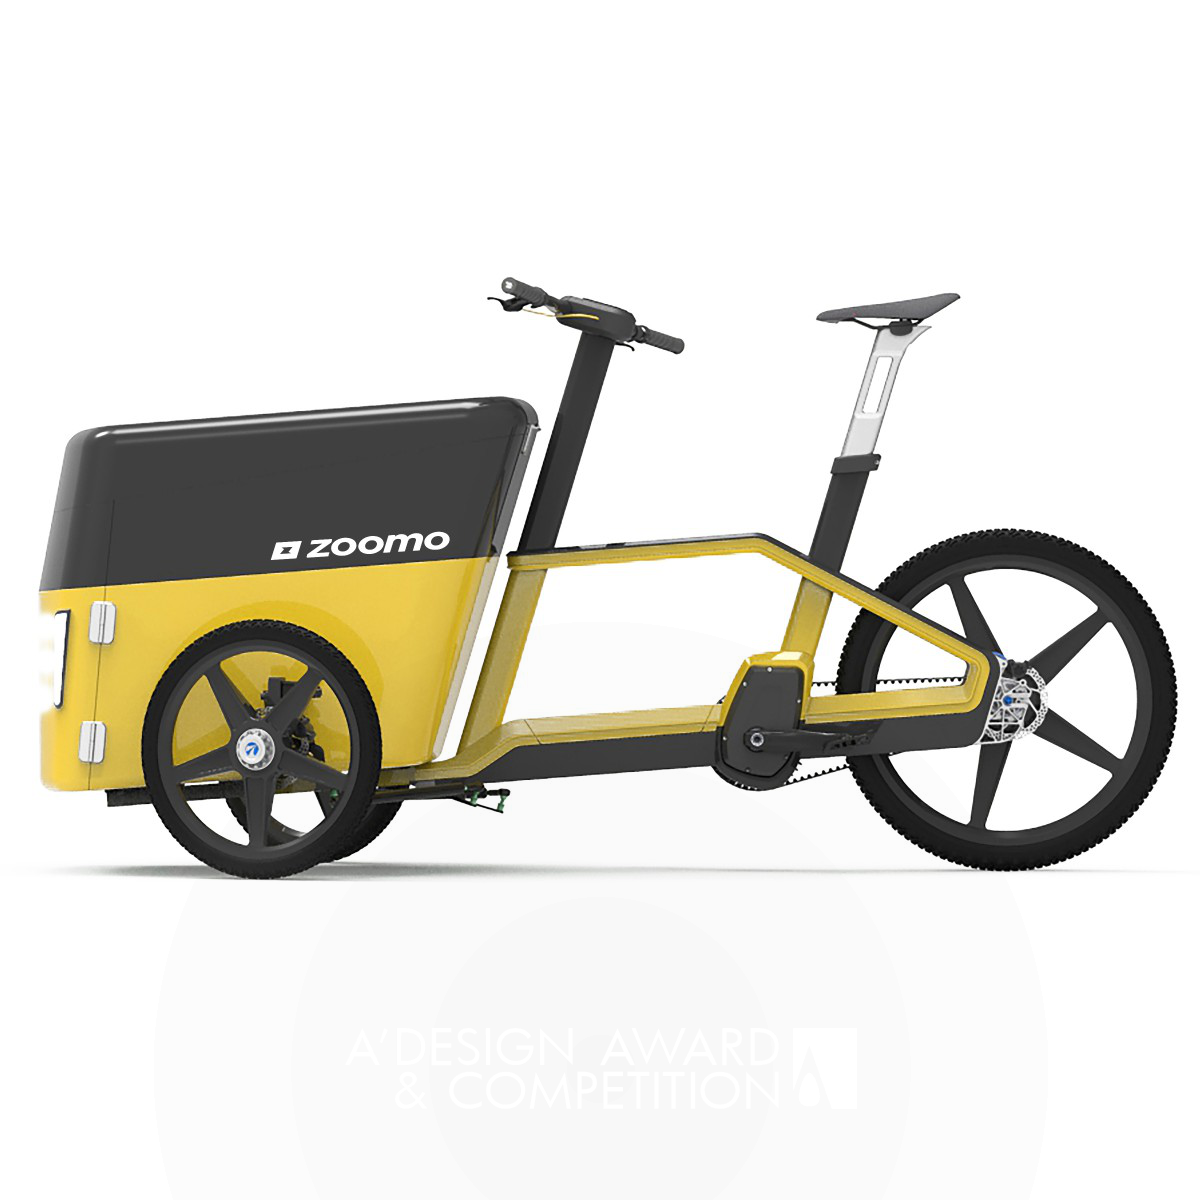 Zoomo Cargo Ebike by Asbjoerk Stanly Mogensen Silver Vehicle, Mobility and Transportation Design Award Winner 2021 